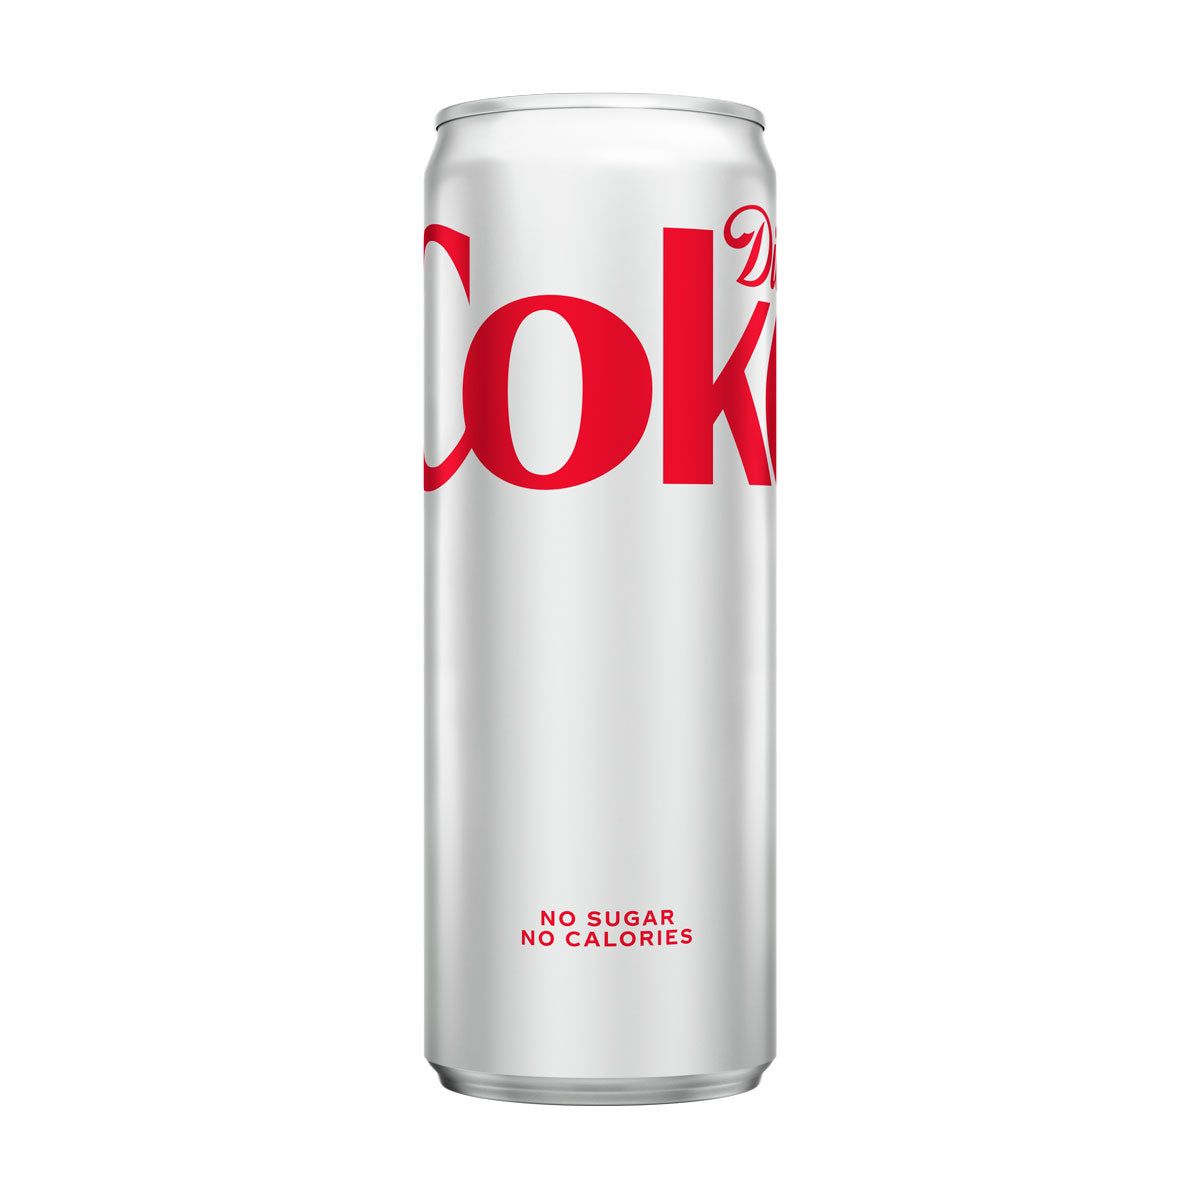 Coca-Cola Diet Coke Slim Can 12 Oz Bottle